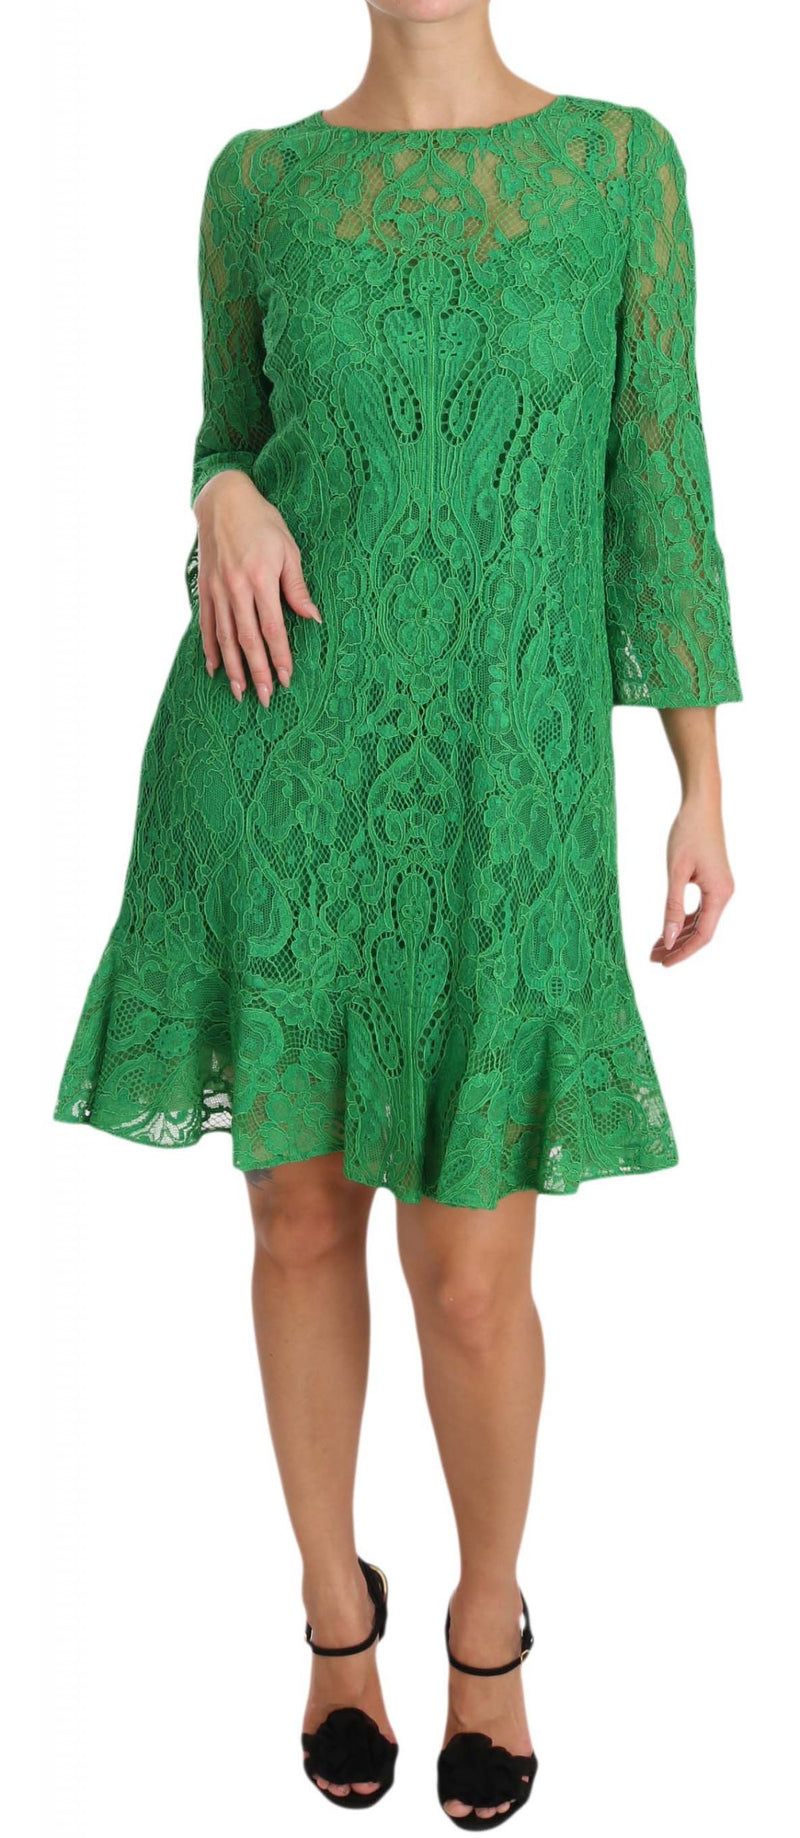 Green Floral Lace Shift A-Line Dress